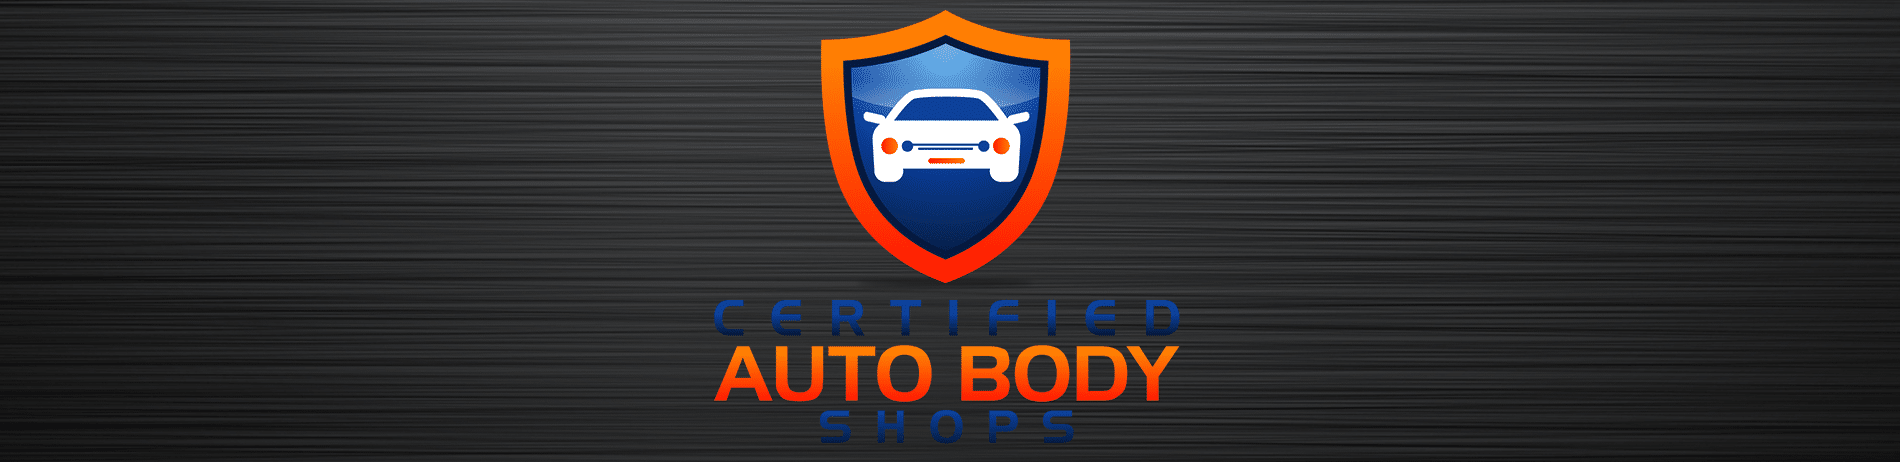 Hyundai Certified Auto Body Shop